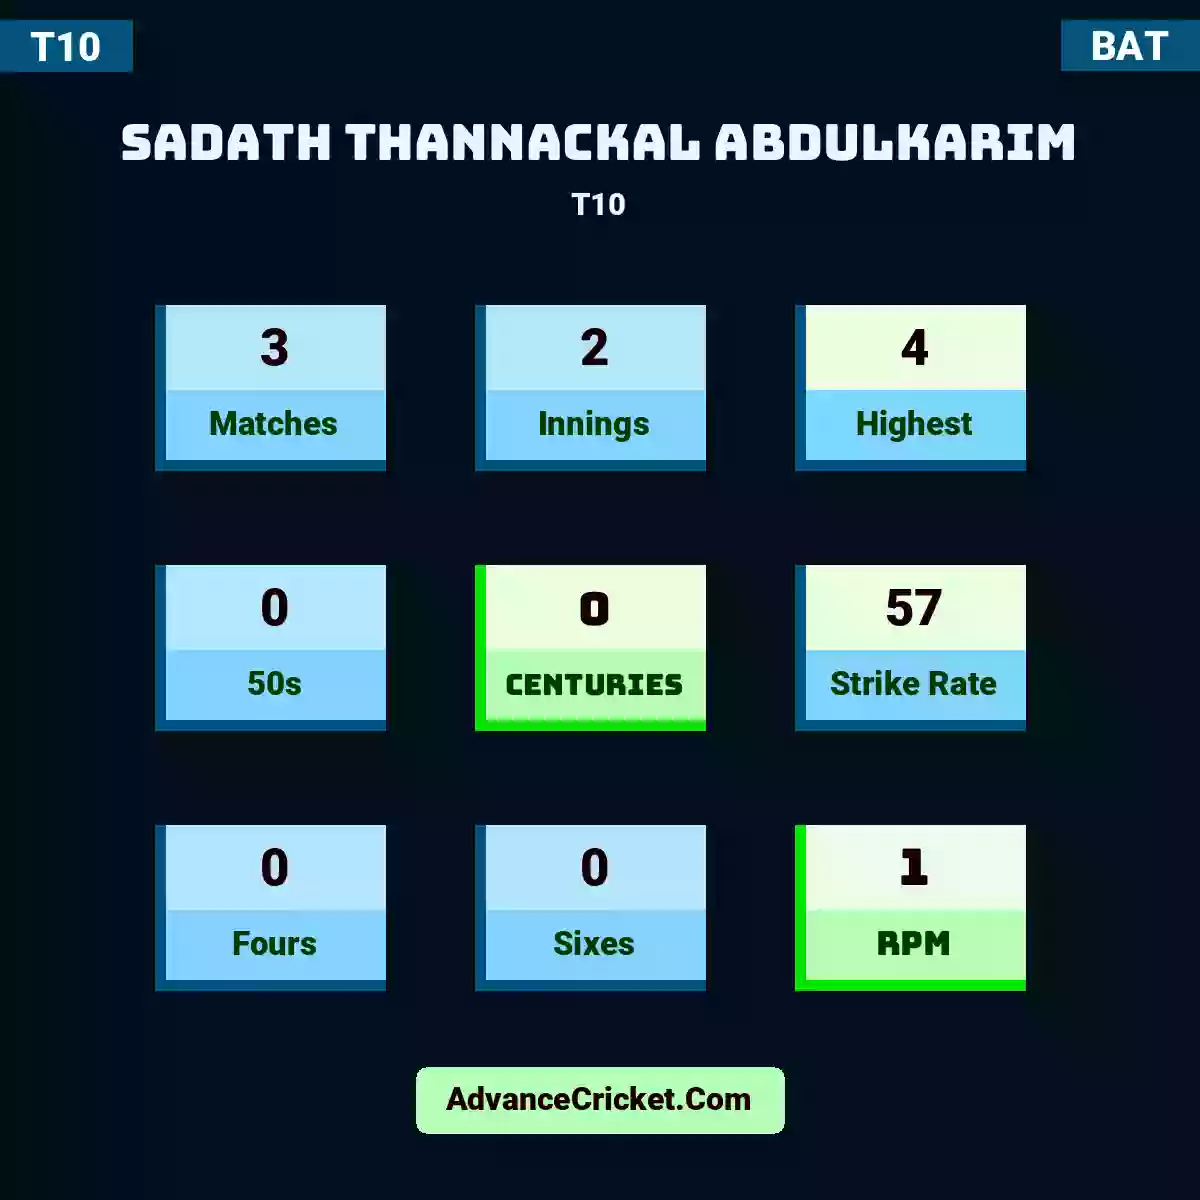 Sadath Thannackal Abdulkarim T10 , Sadath Thannackal Abdulkarim played 3 matches, scored 4 runs as highest, 0 half-centuries, and 0 centuries, with a strike rate of 57. S.Abdulkarim hit 0 fours and 0 sixes, with an RPM of 1.